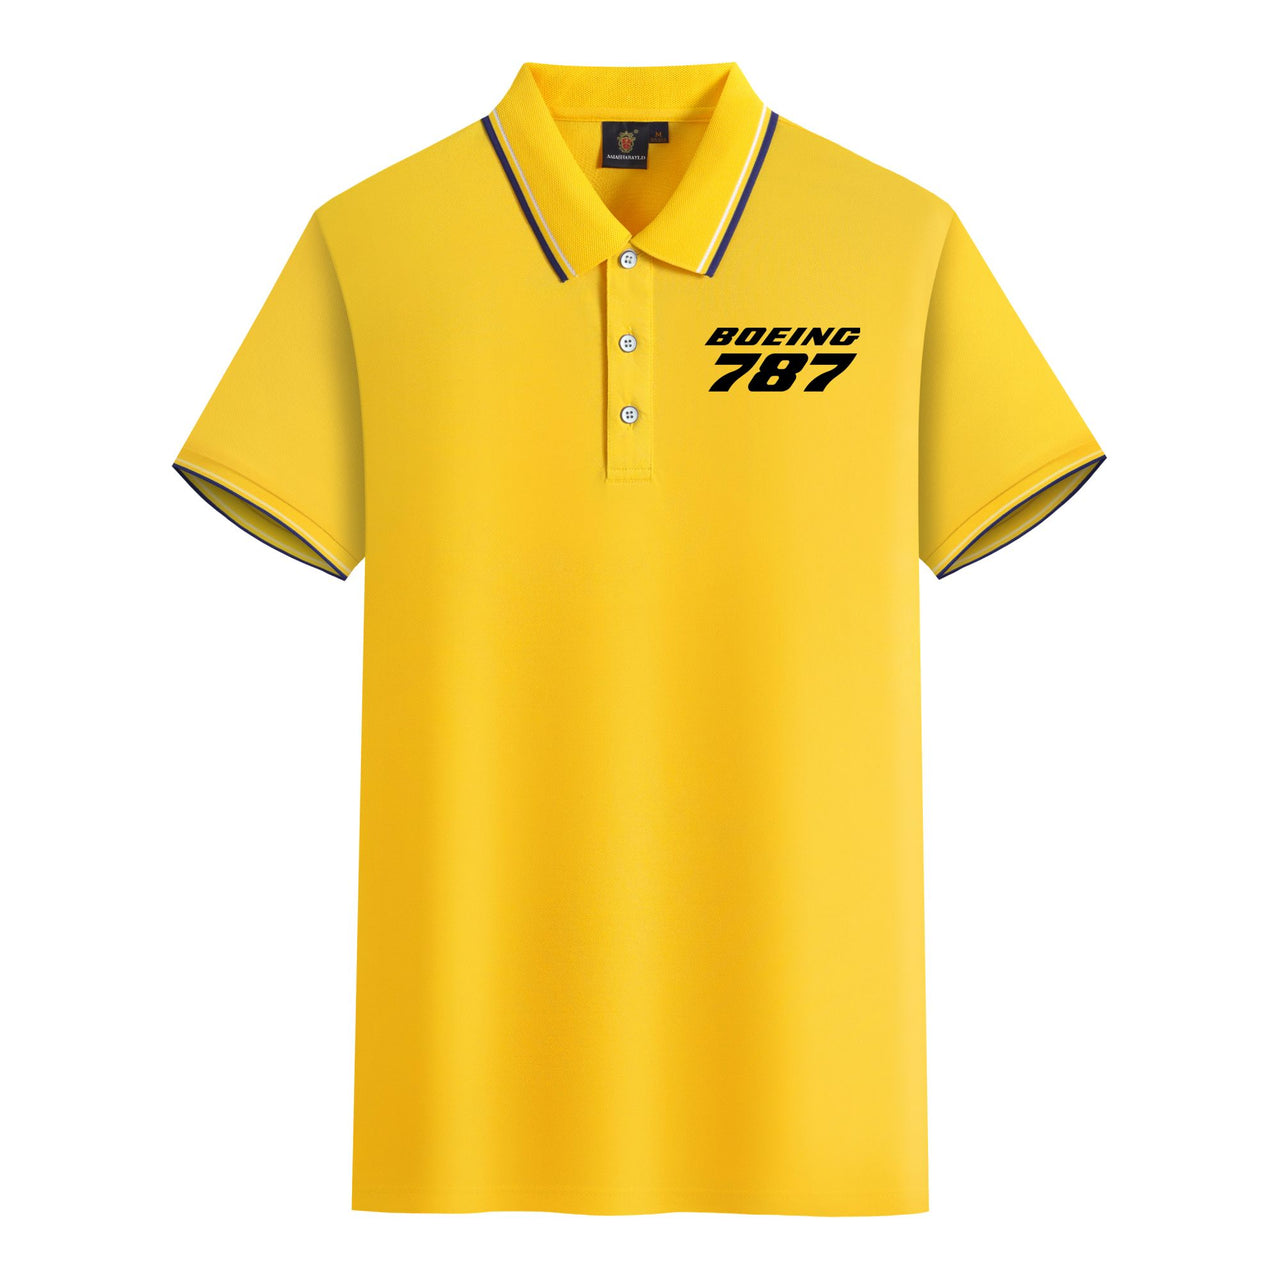 Boeing 787 & Text Designed Stylish Polo T-Shirts